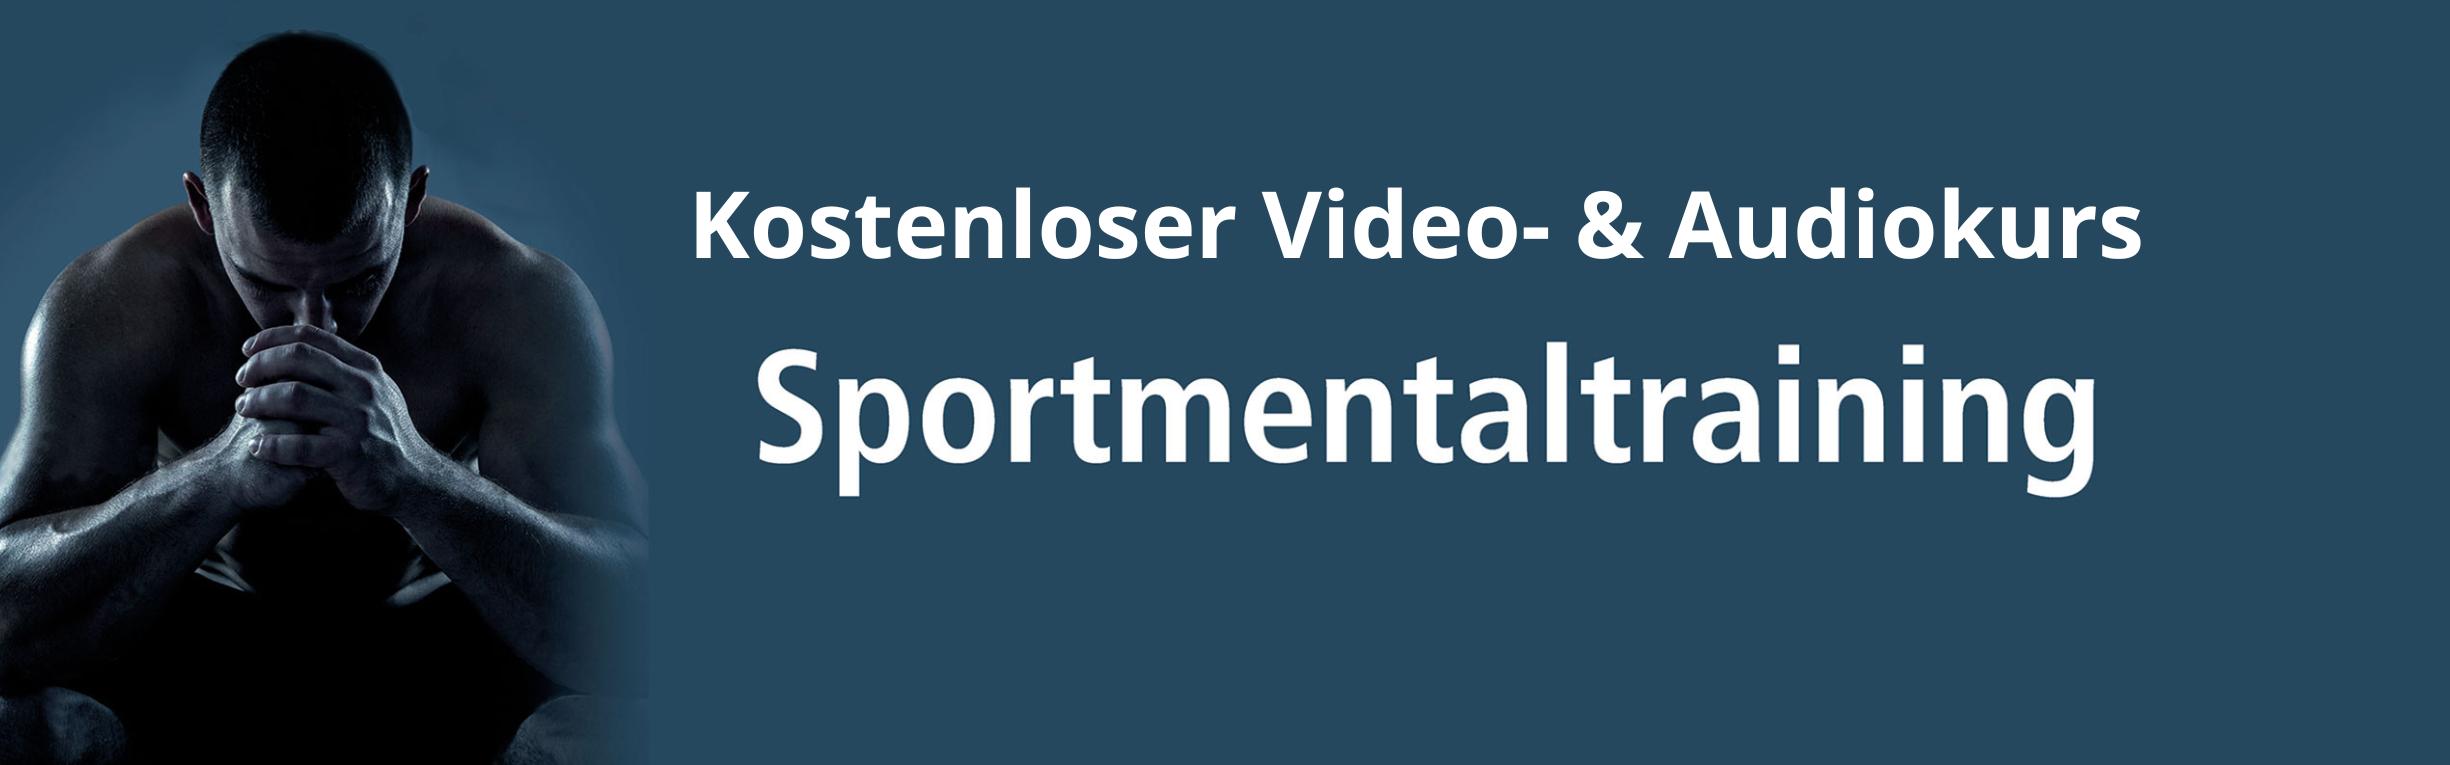 Kostenloser Video- Audiokurs Sportmentaltraining